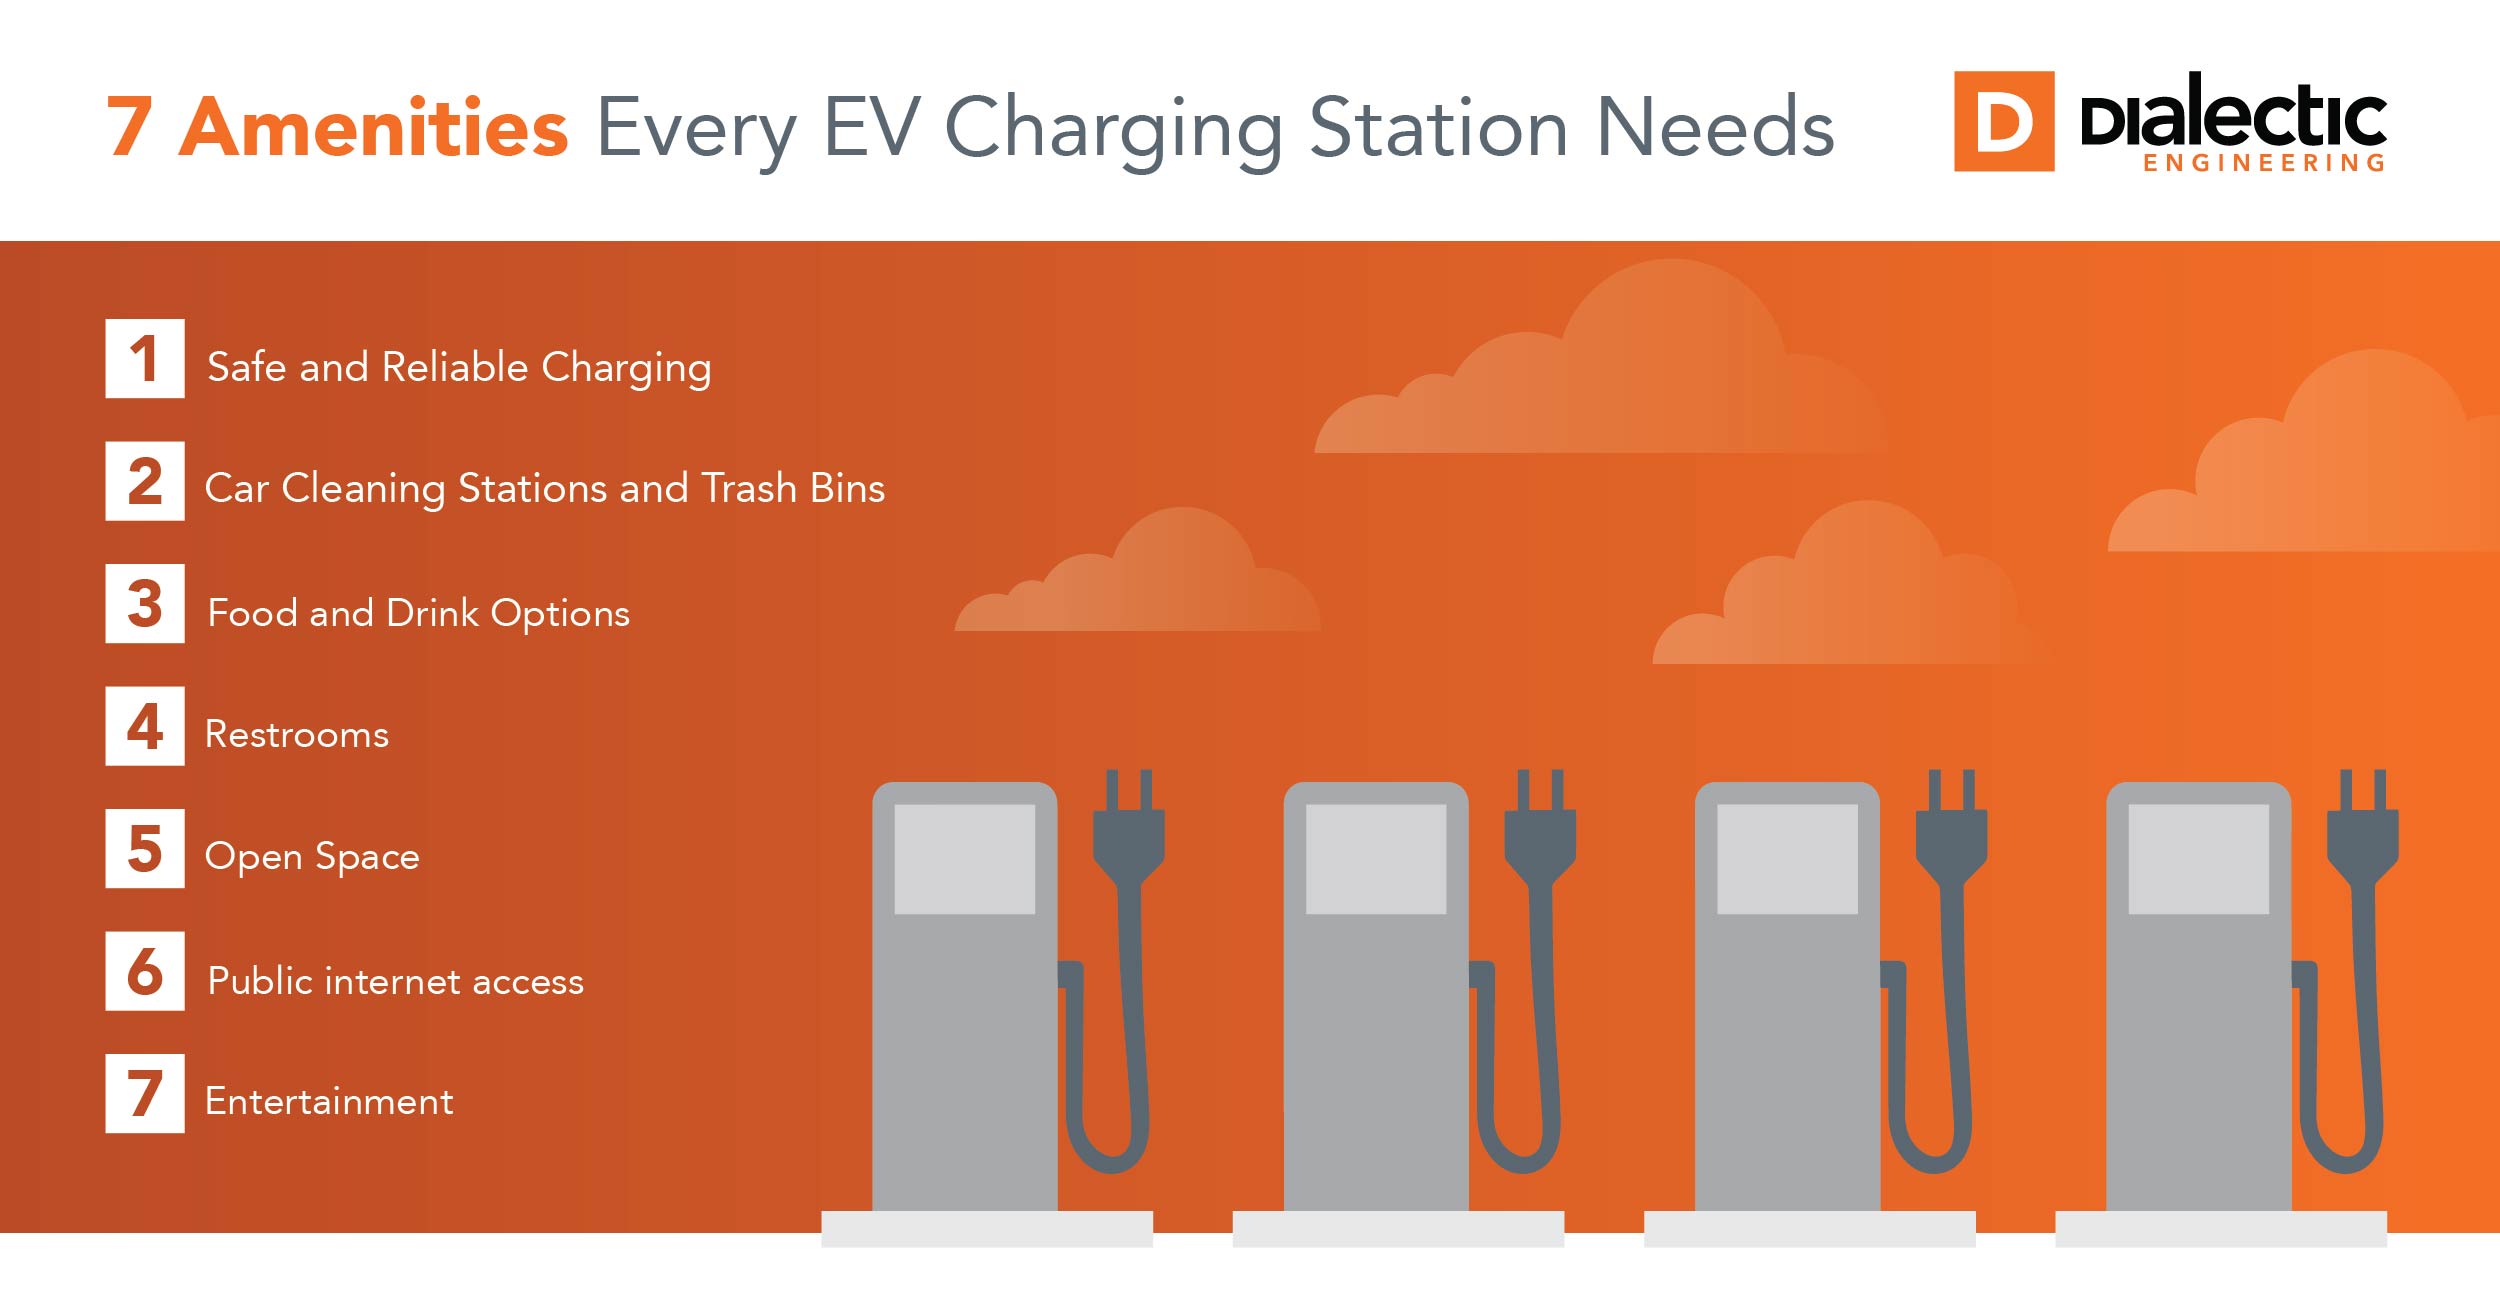 7 Amenities Every EV Charging Station Needs